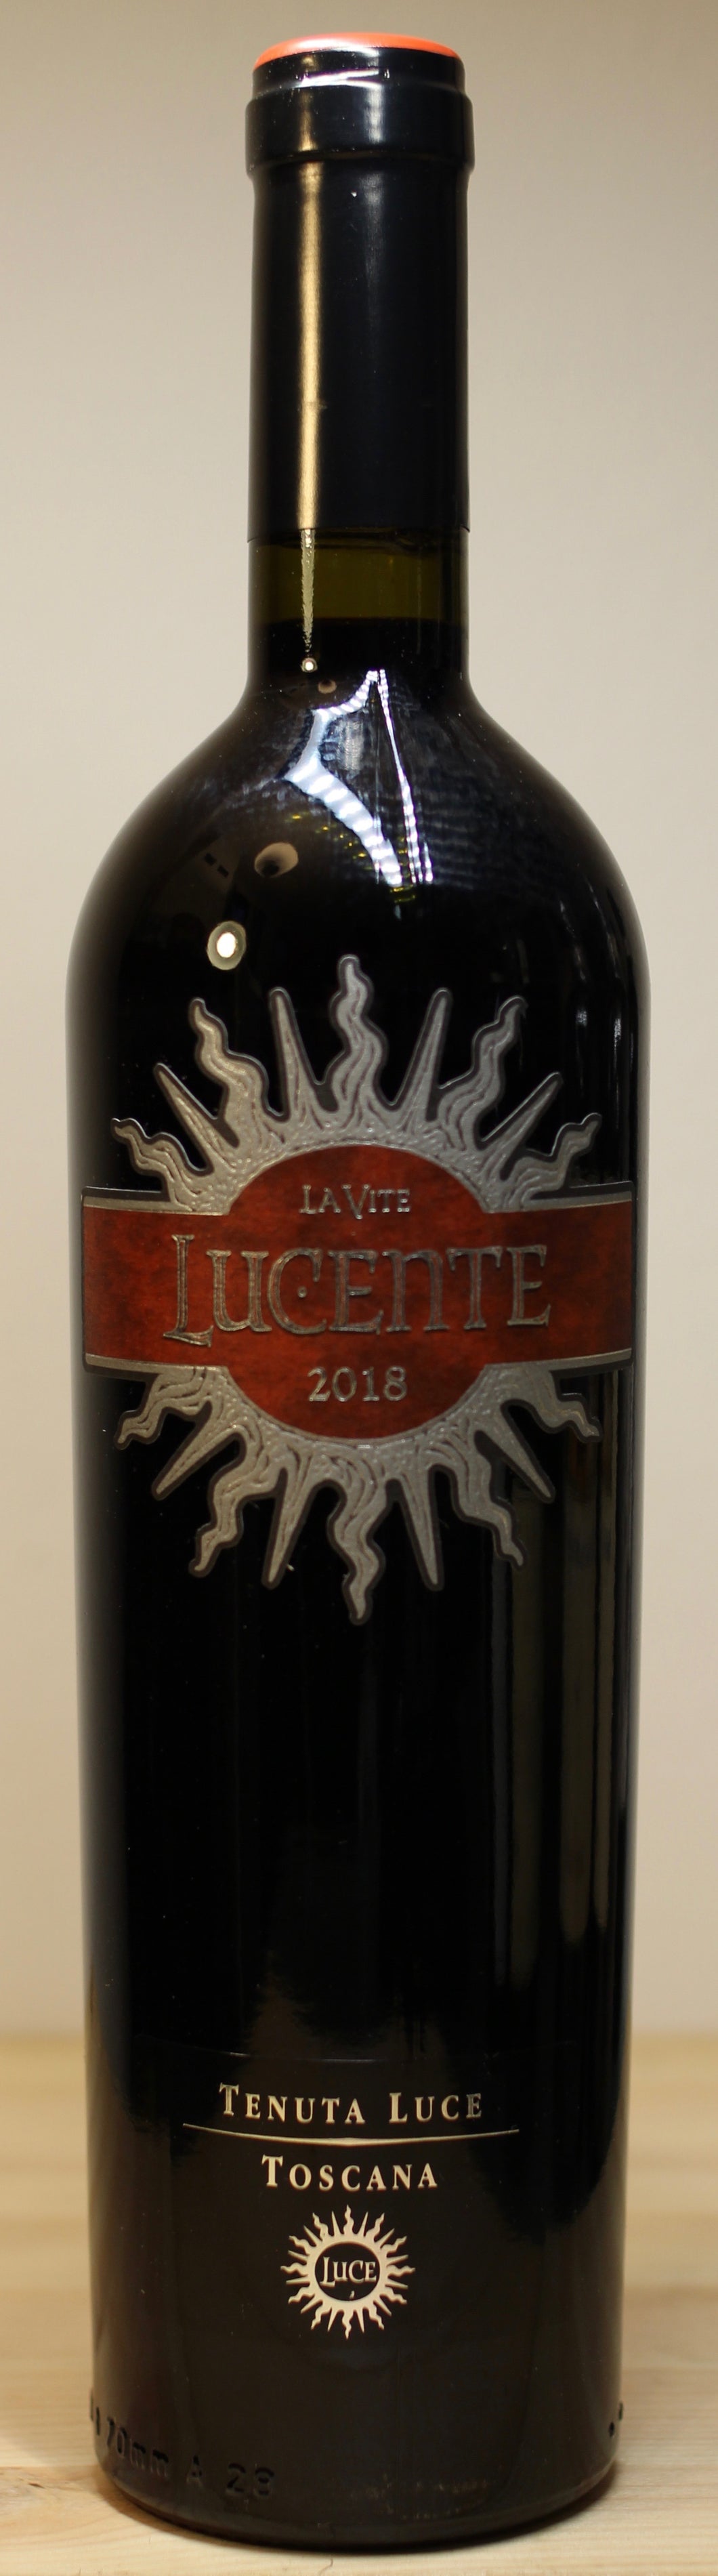 Lucente Toscana IGT 2018,  Luce della Vite